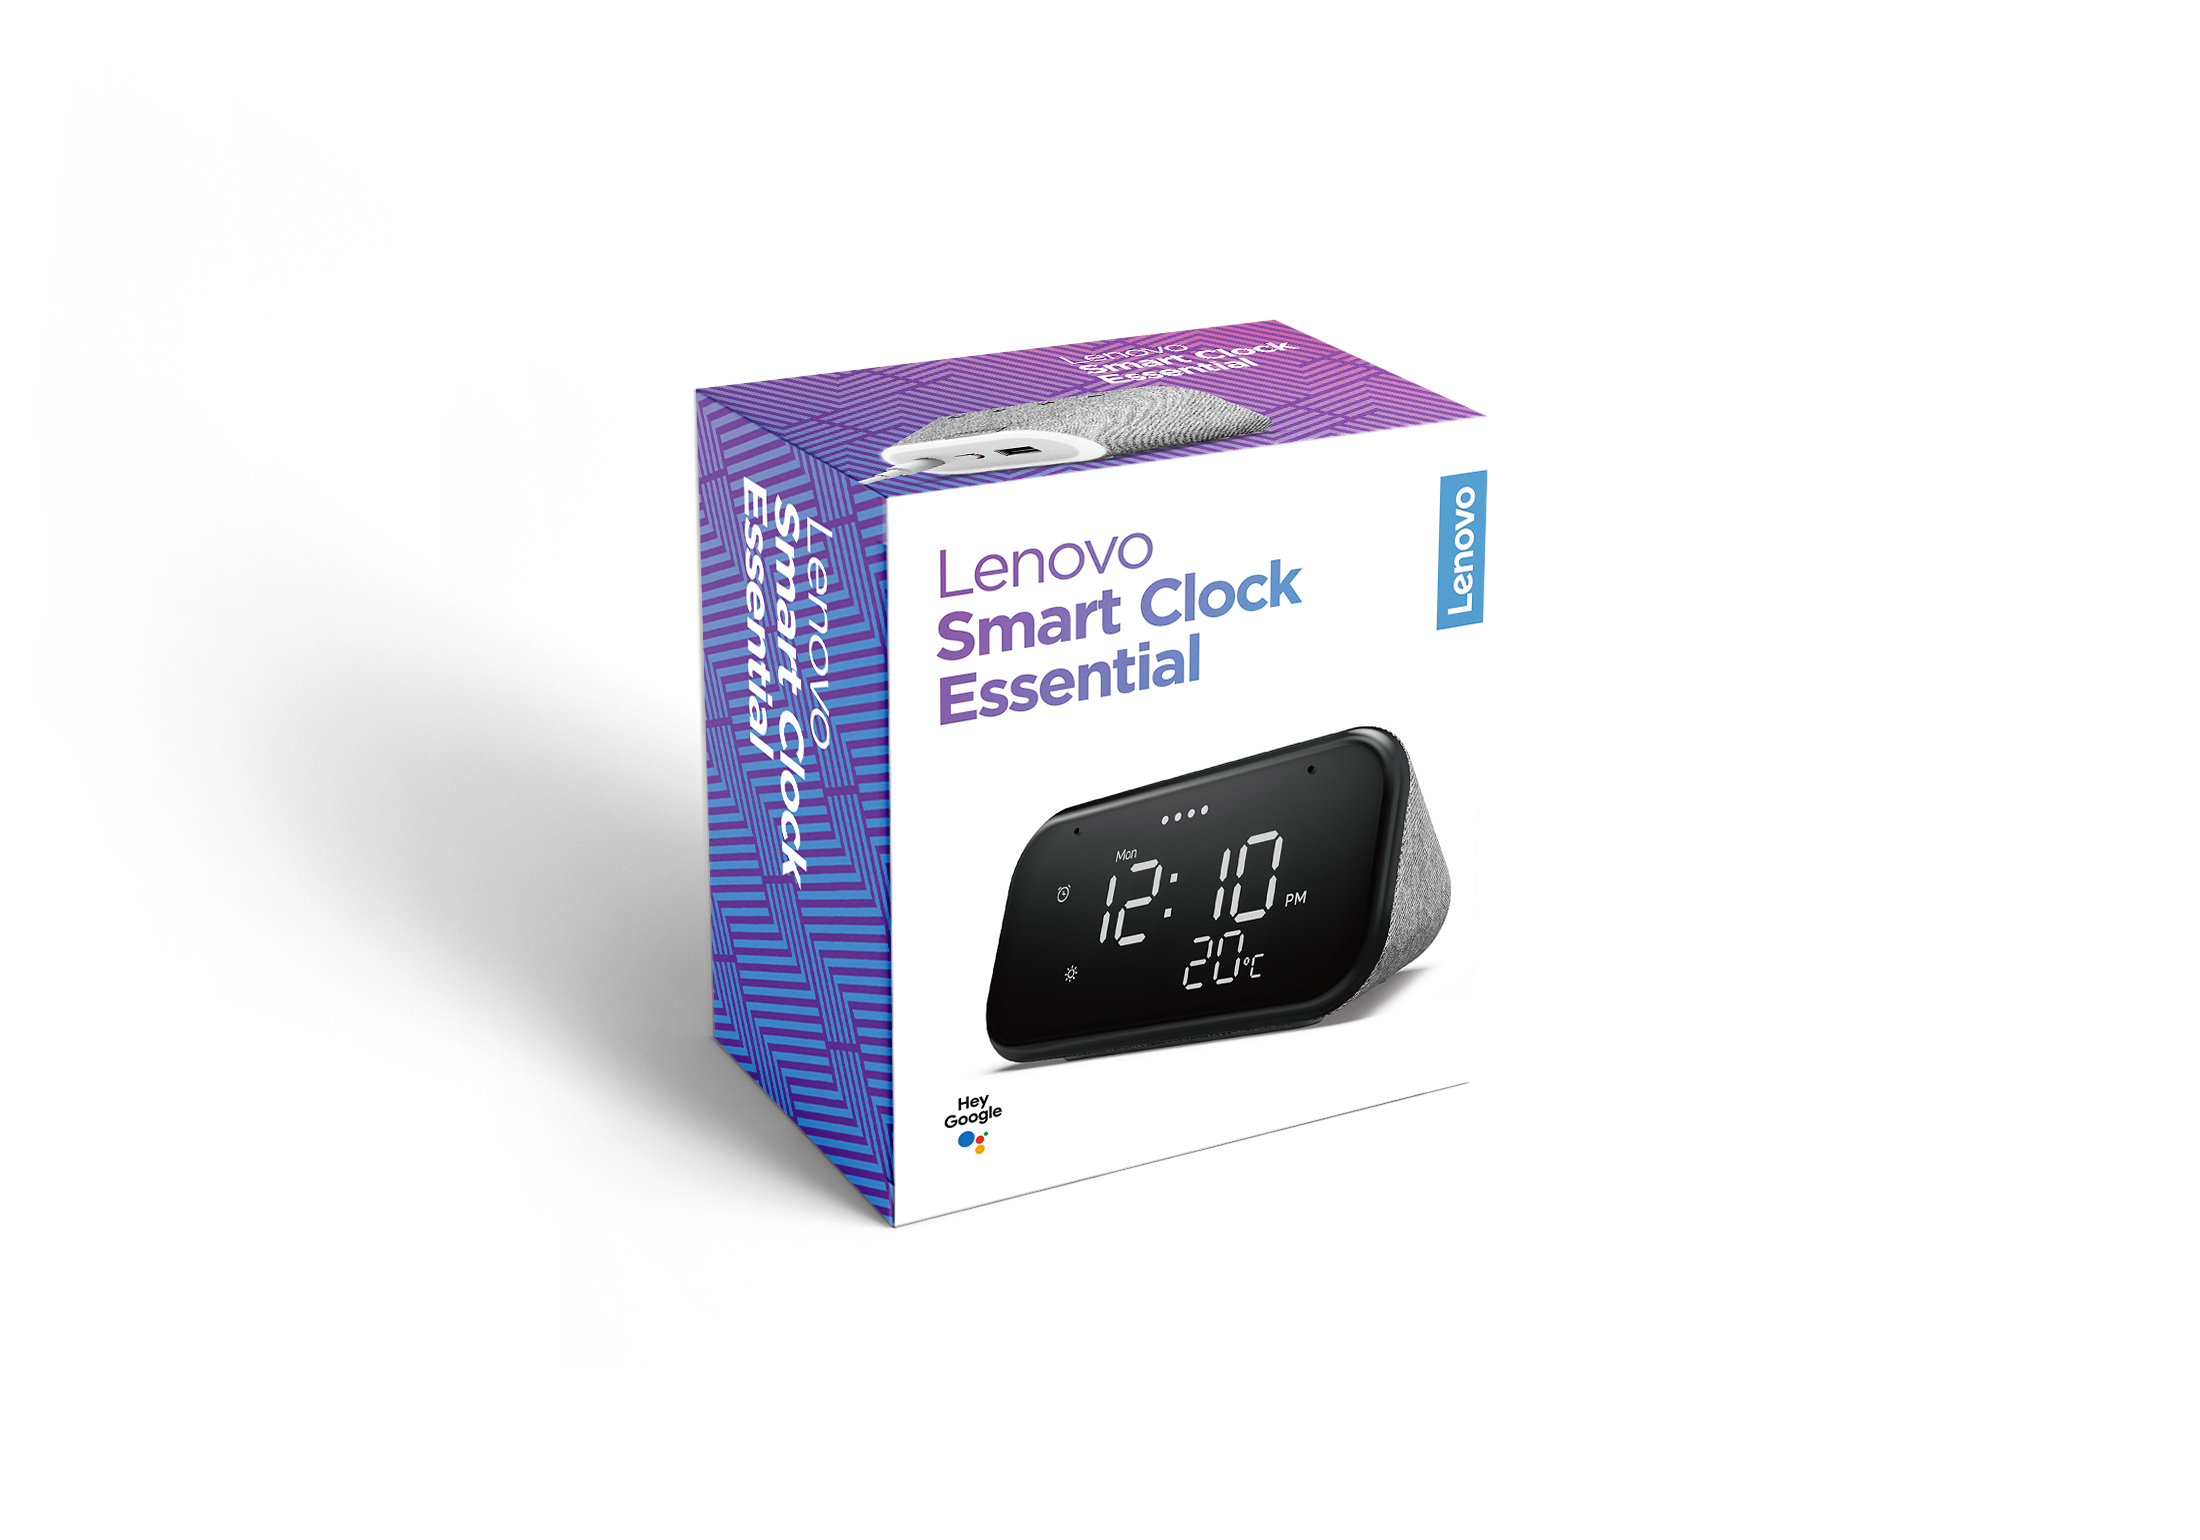 Lenovo Smart Clock Essential - image 2 of 8